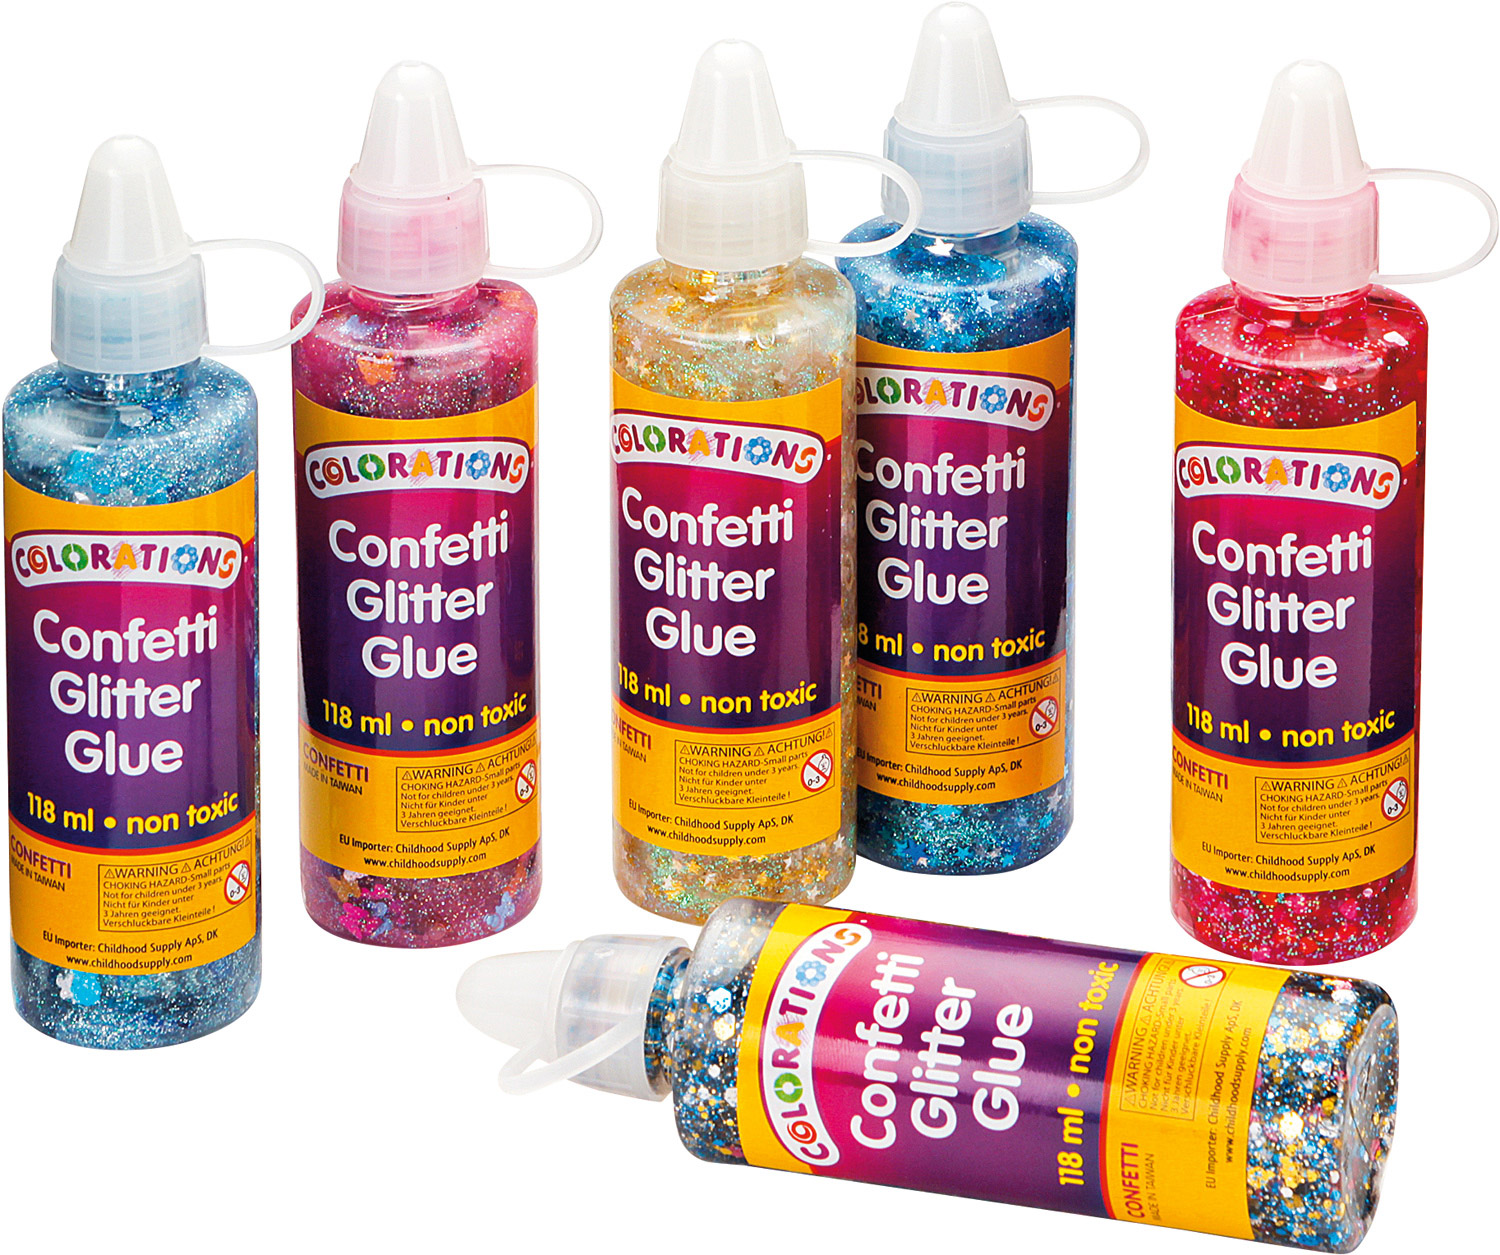 Confetti Glitter Glue